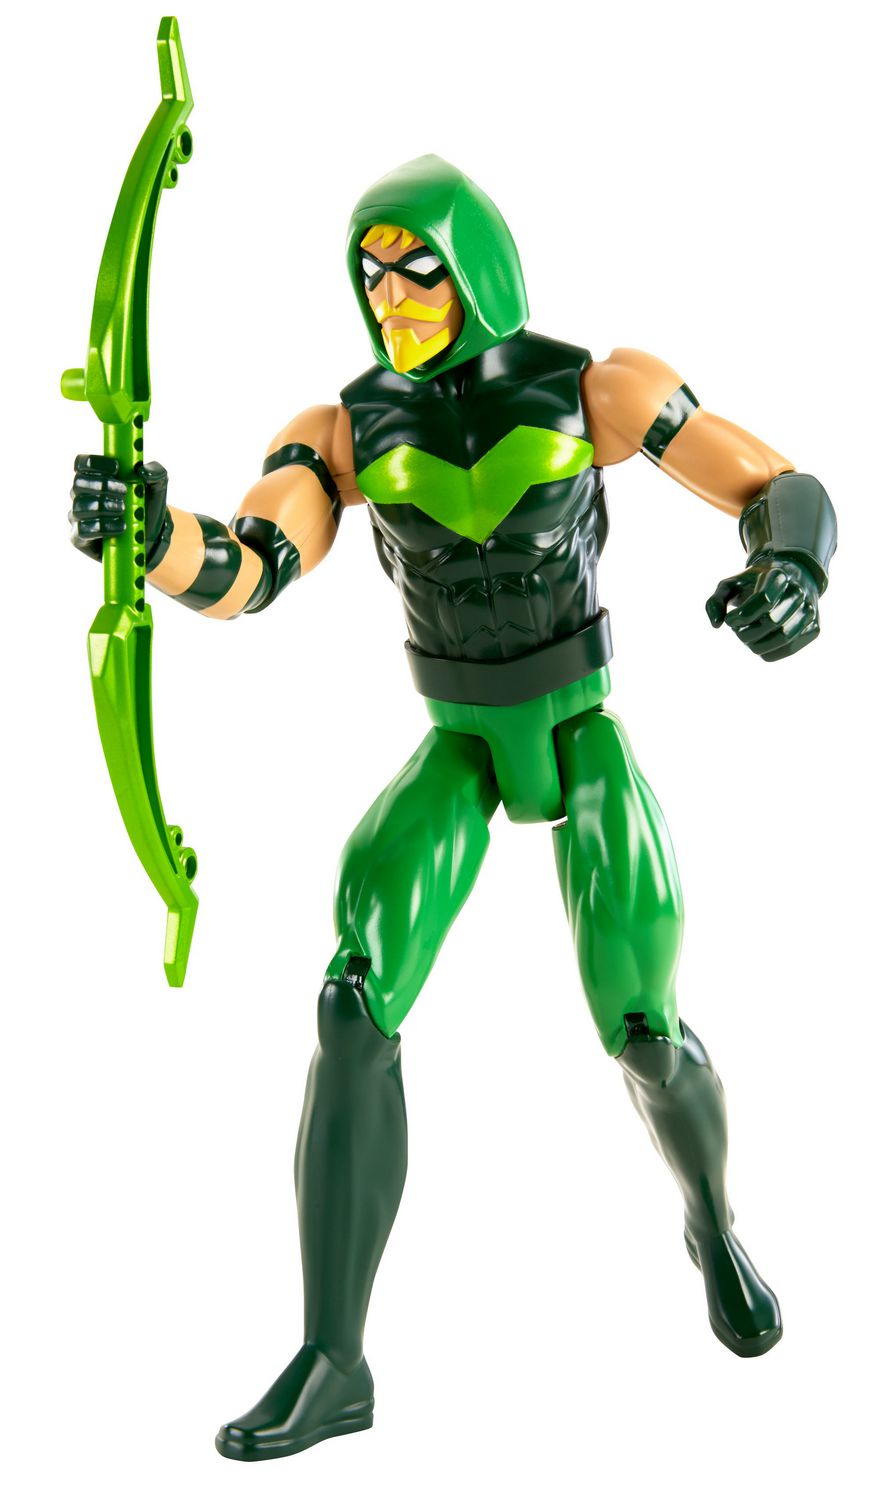  DC Collectibles Arrow Action Figure : Toys & Games